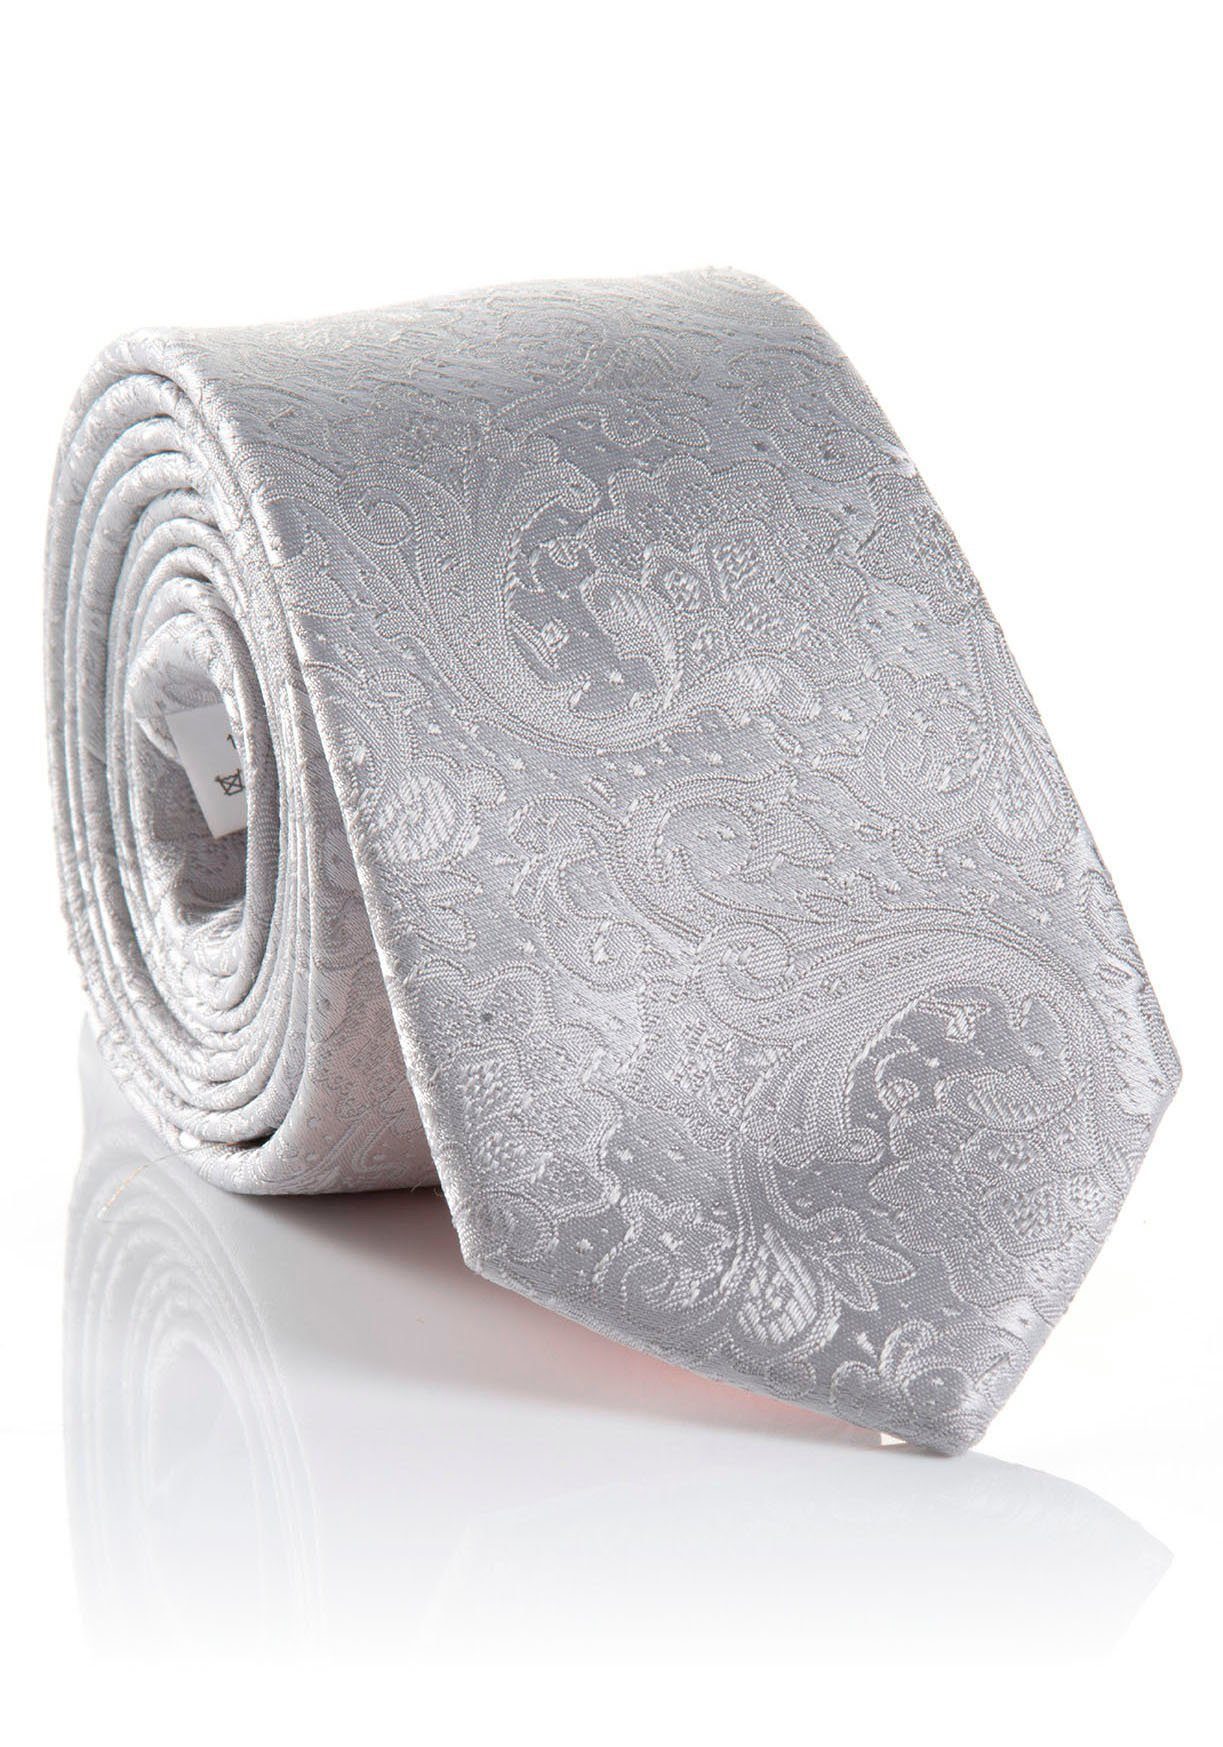 MONTI Krawatte reiner silver aus Seide, Krawatte Paisley-Muster LELIO